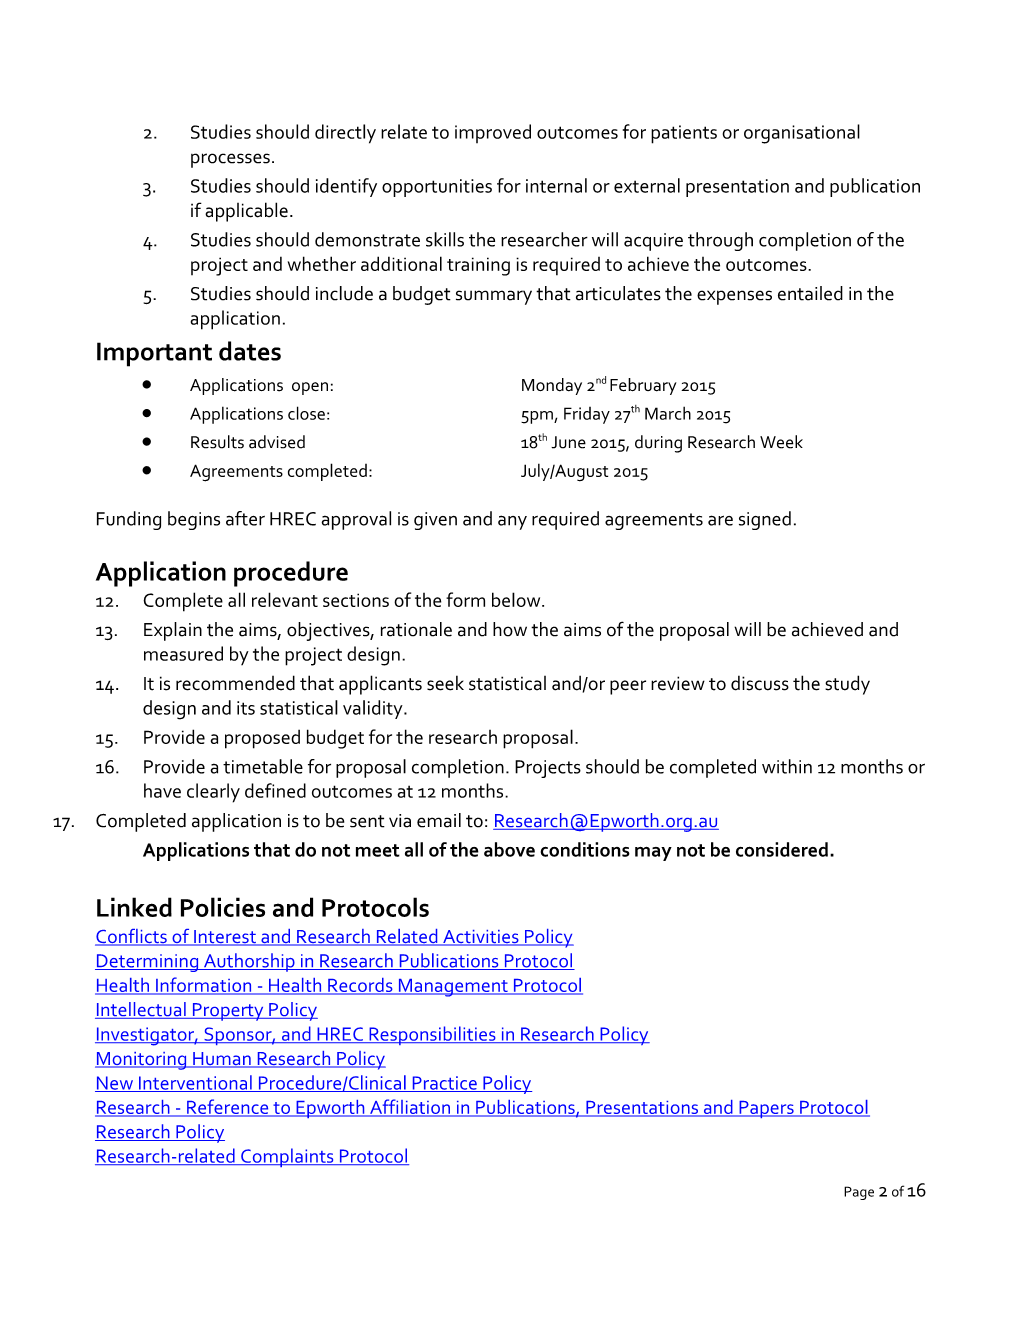 ERI Grant Application Guidelines 2015